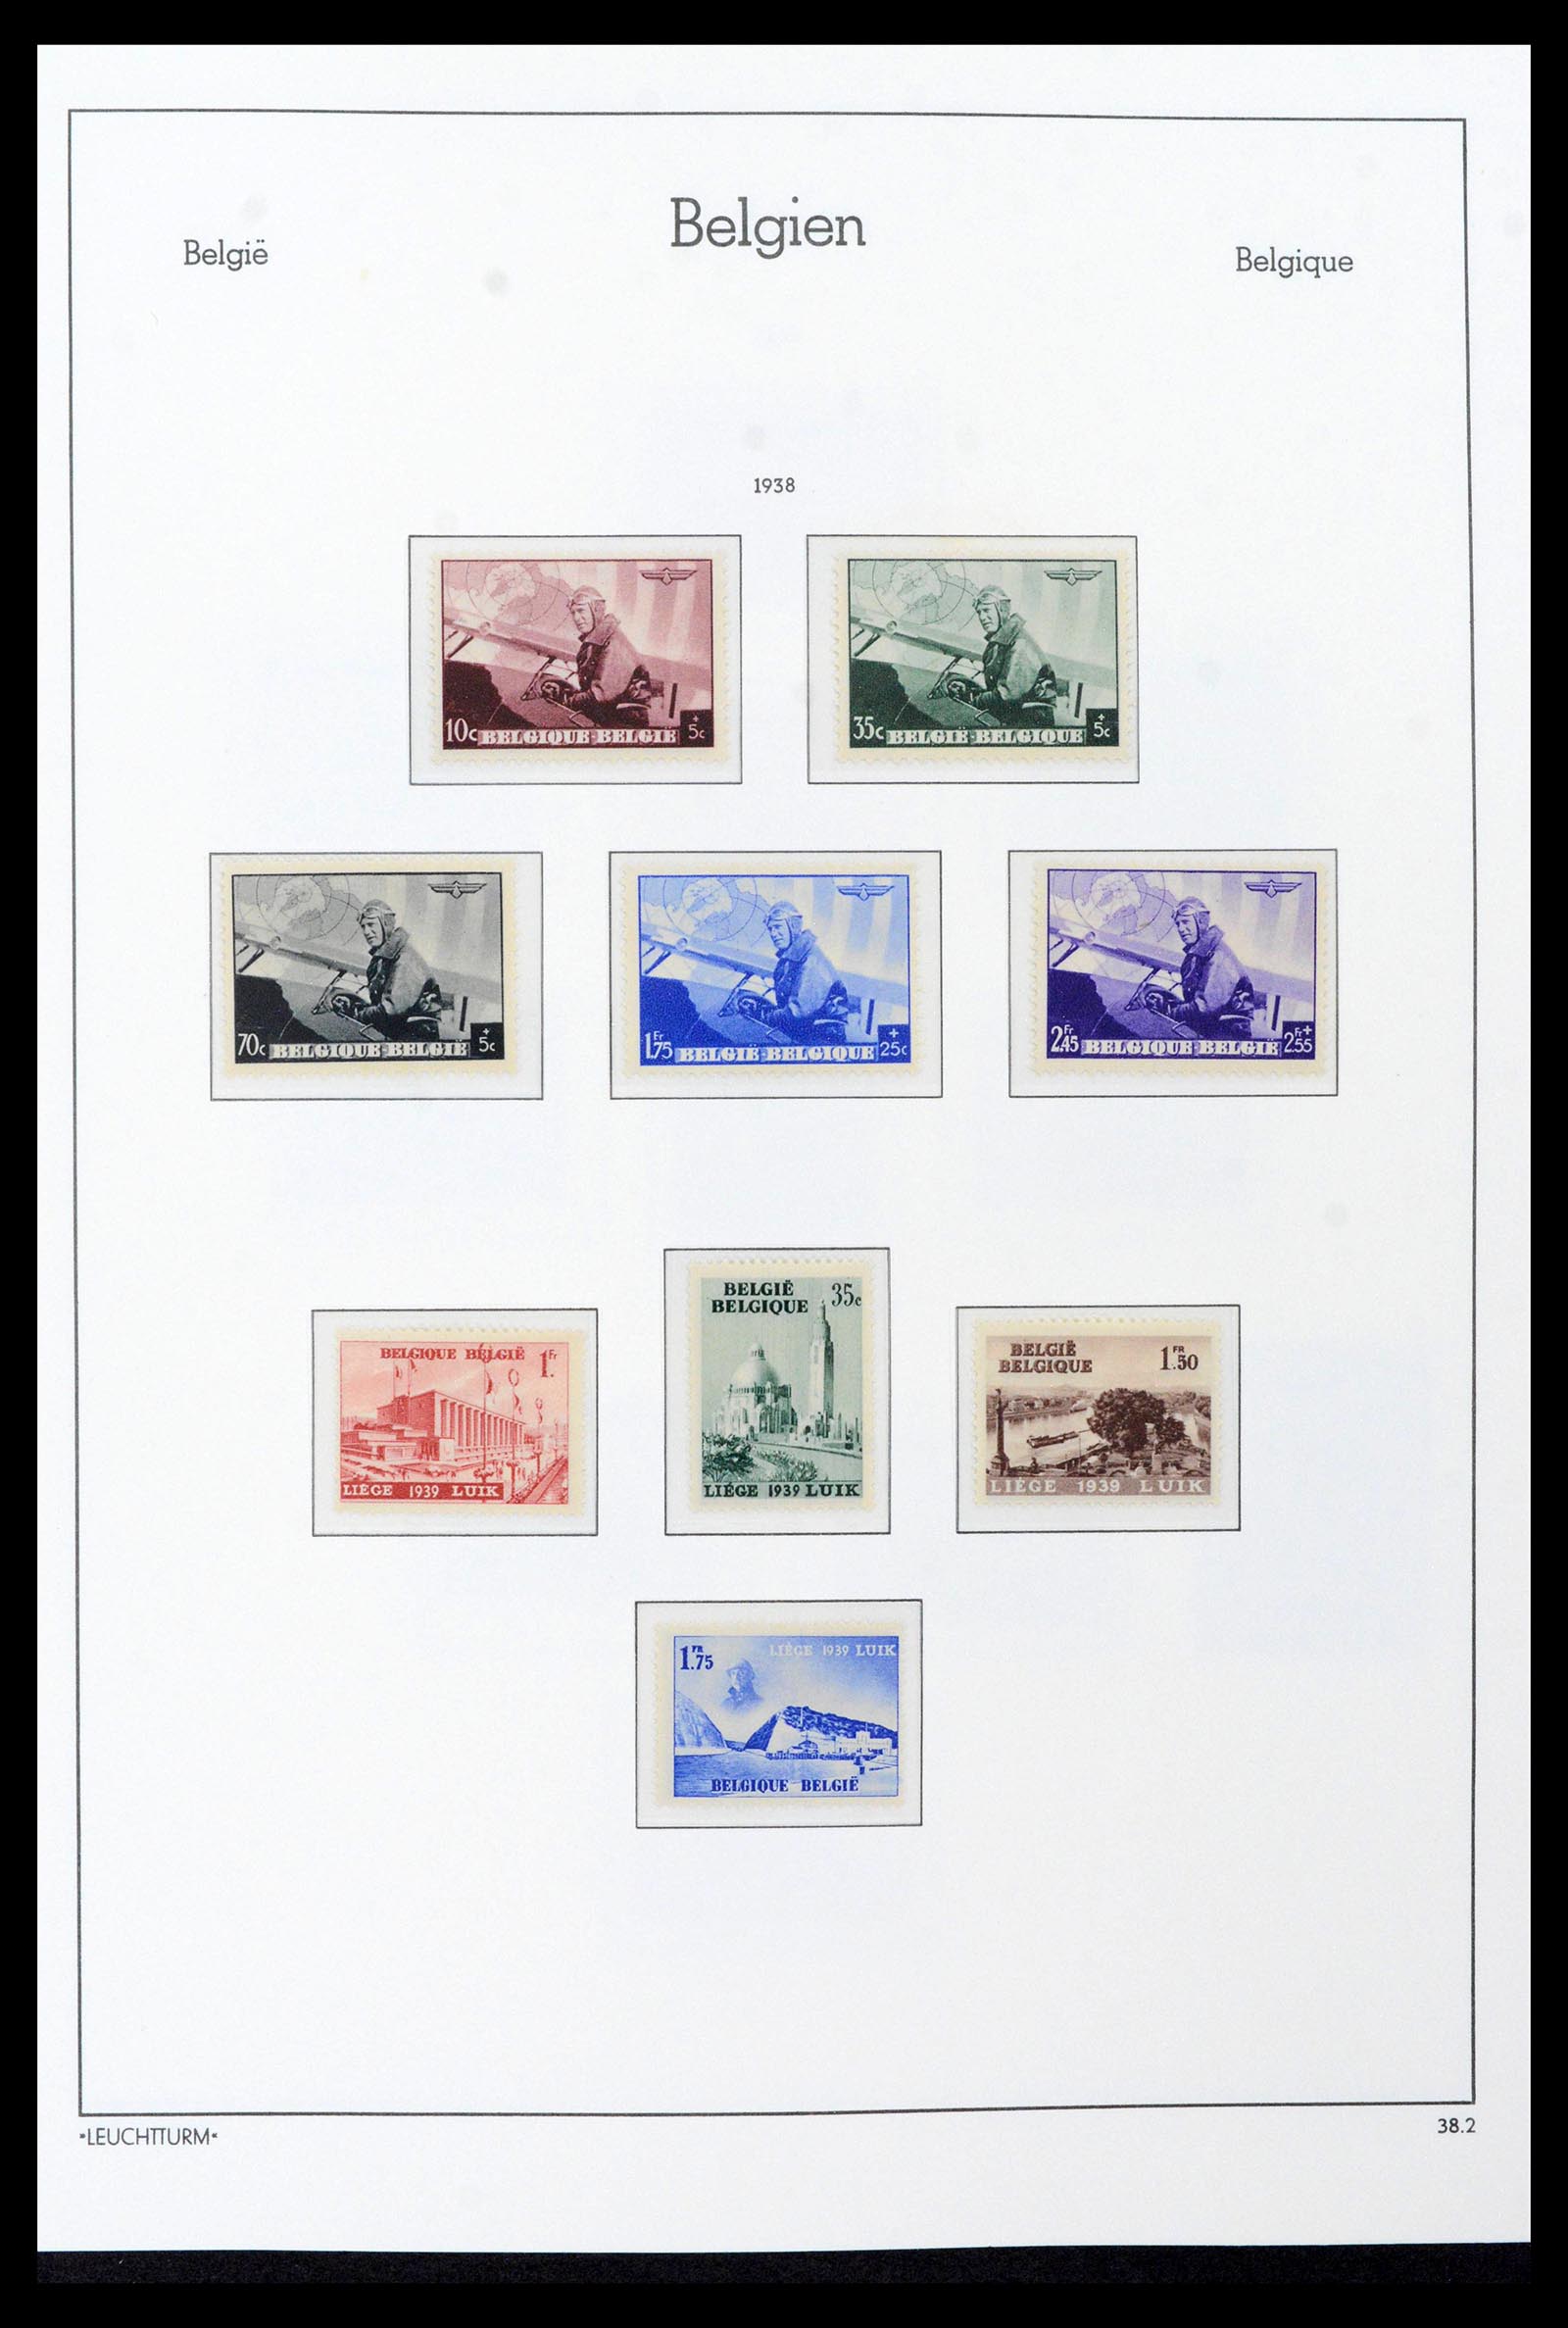 39137 0066 - Stamp collection 39137 Belgium 1849-2002.